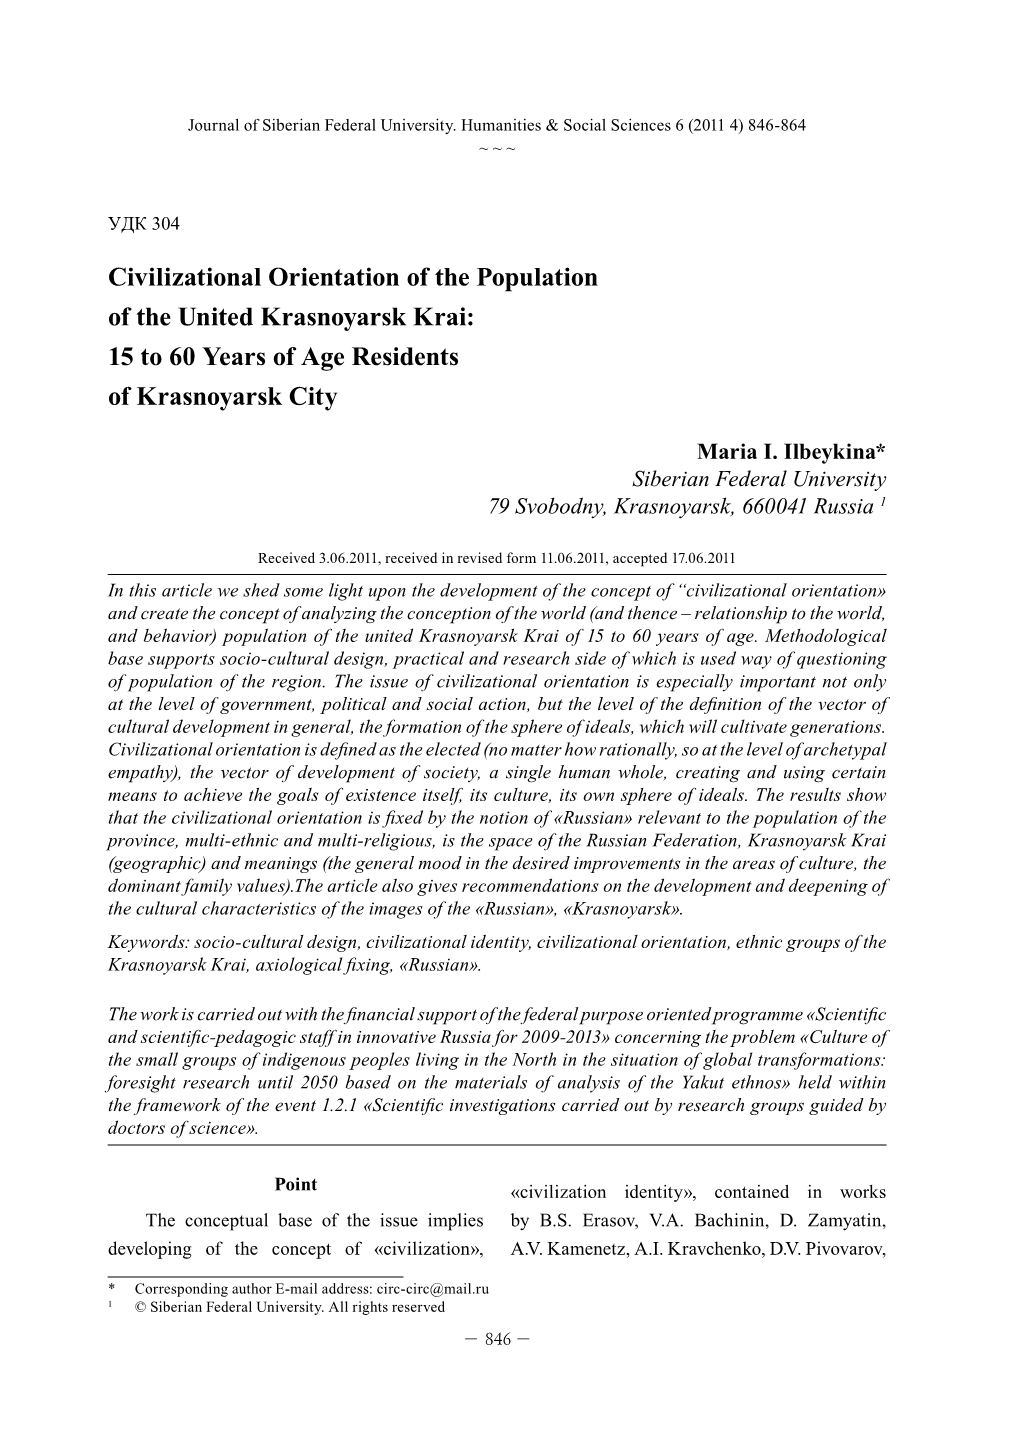 Civilizational Orientation of the Population of the United Krasnoyarsk Krai: 15 to 60 Years of Age Residents of Krasnoyarsk City